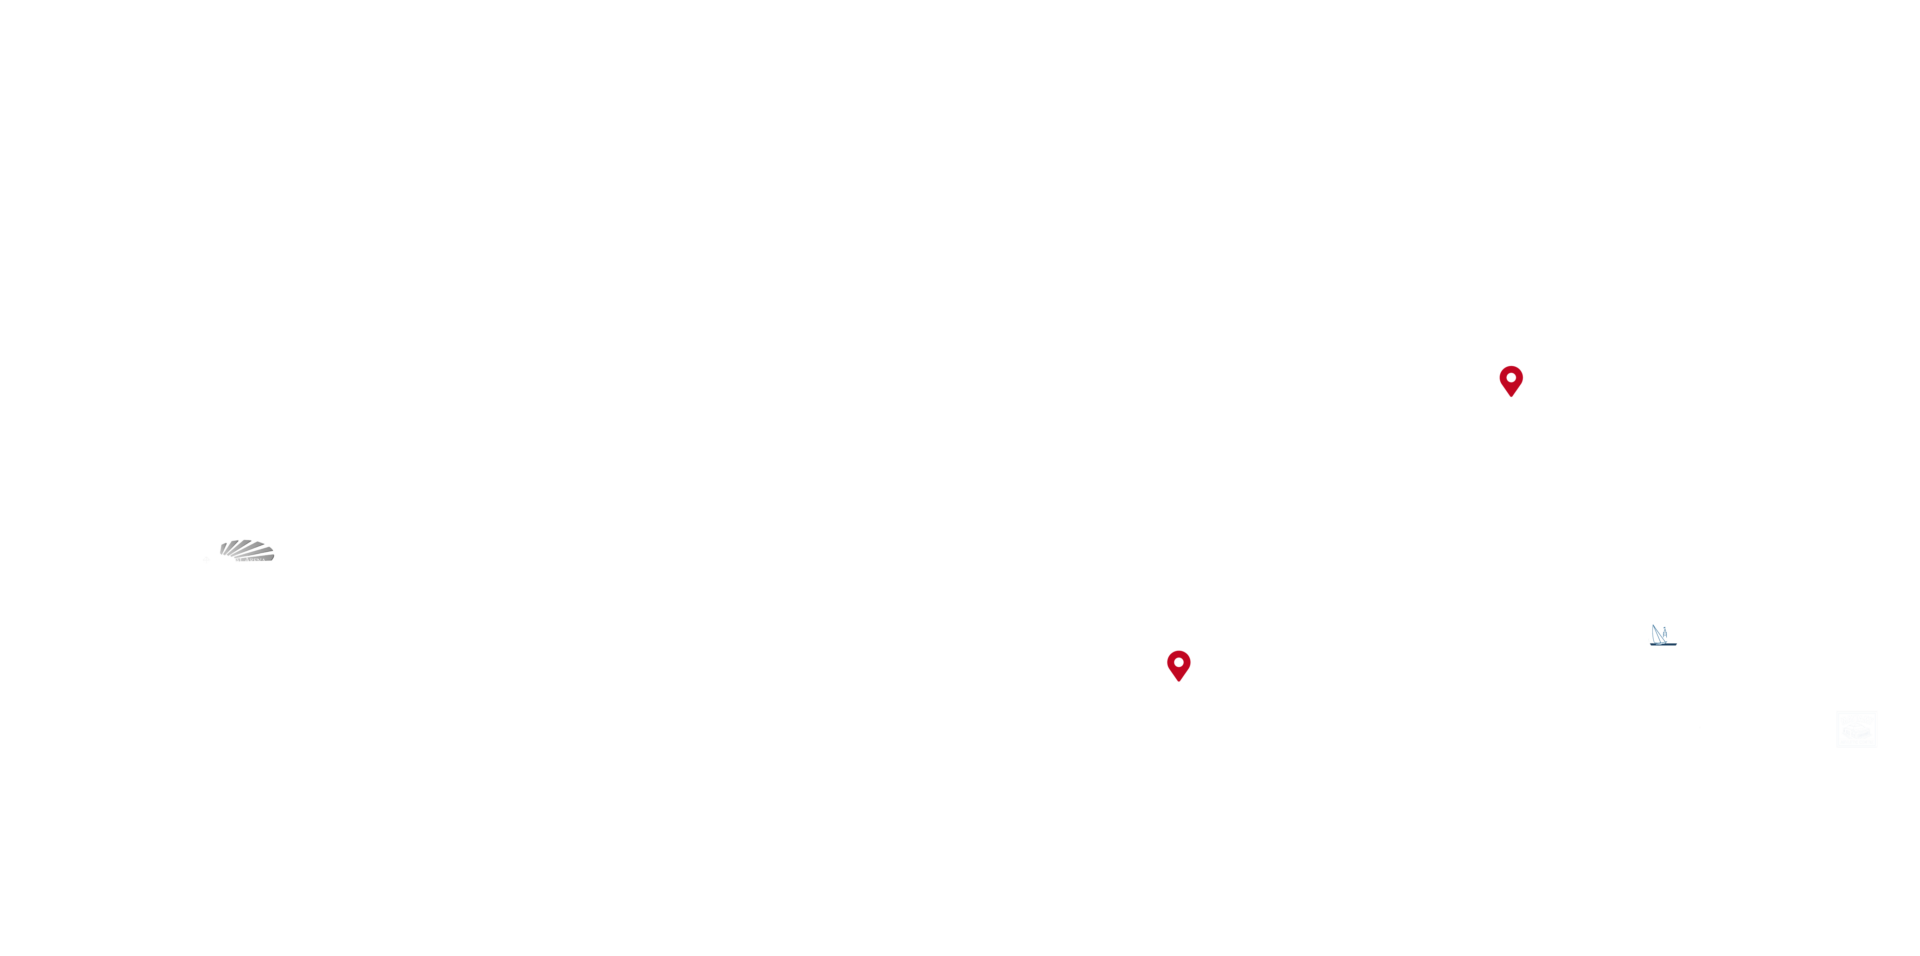 Canadian Alliance